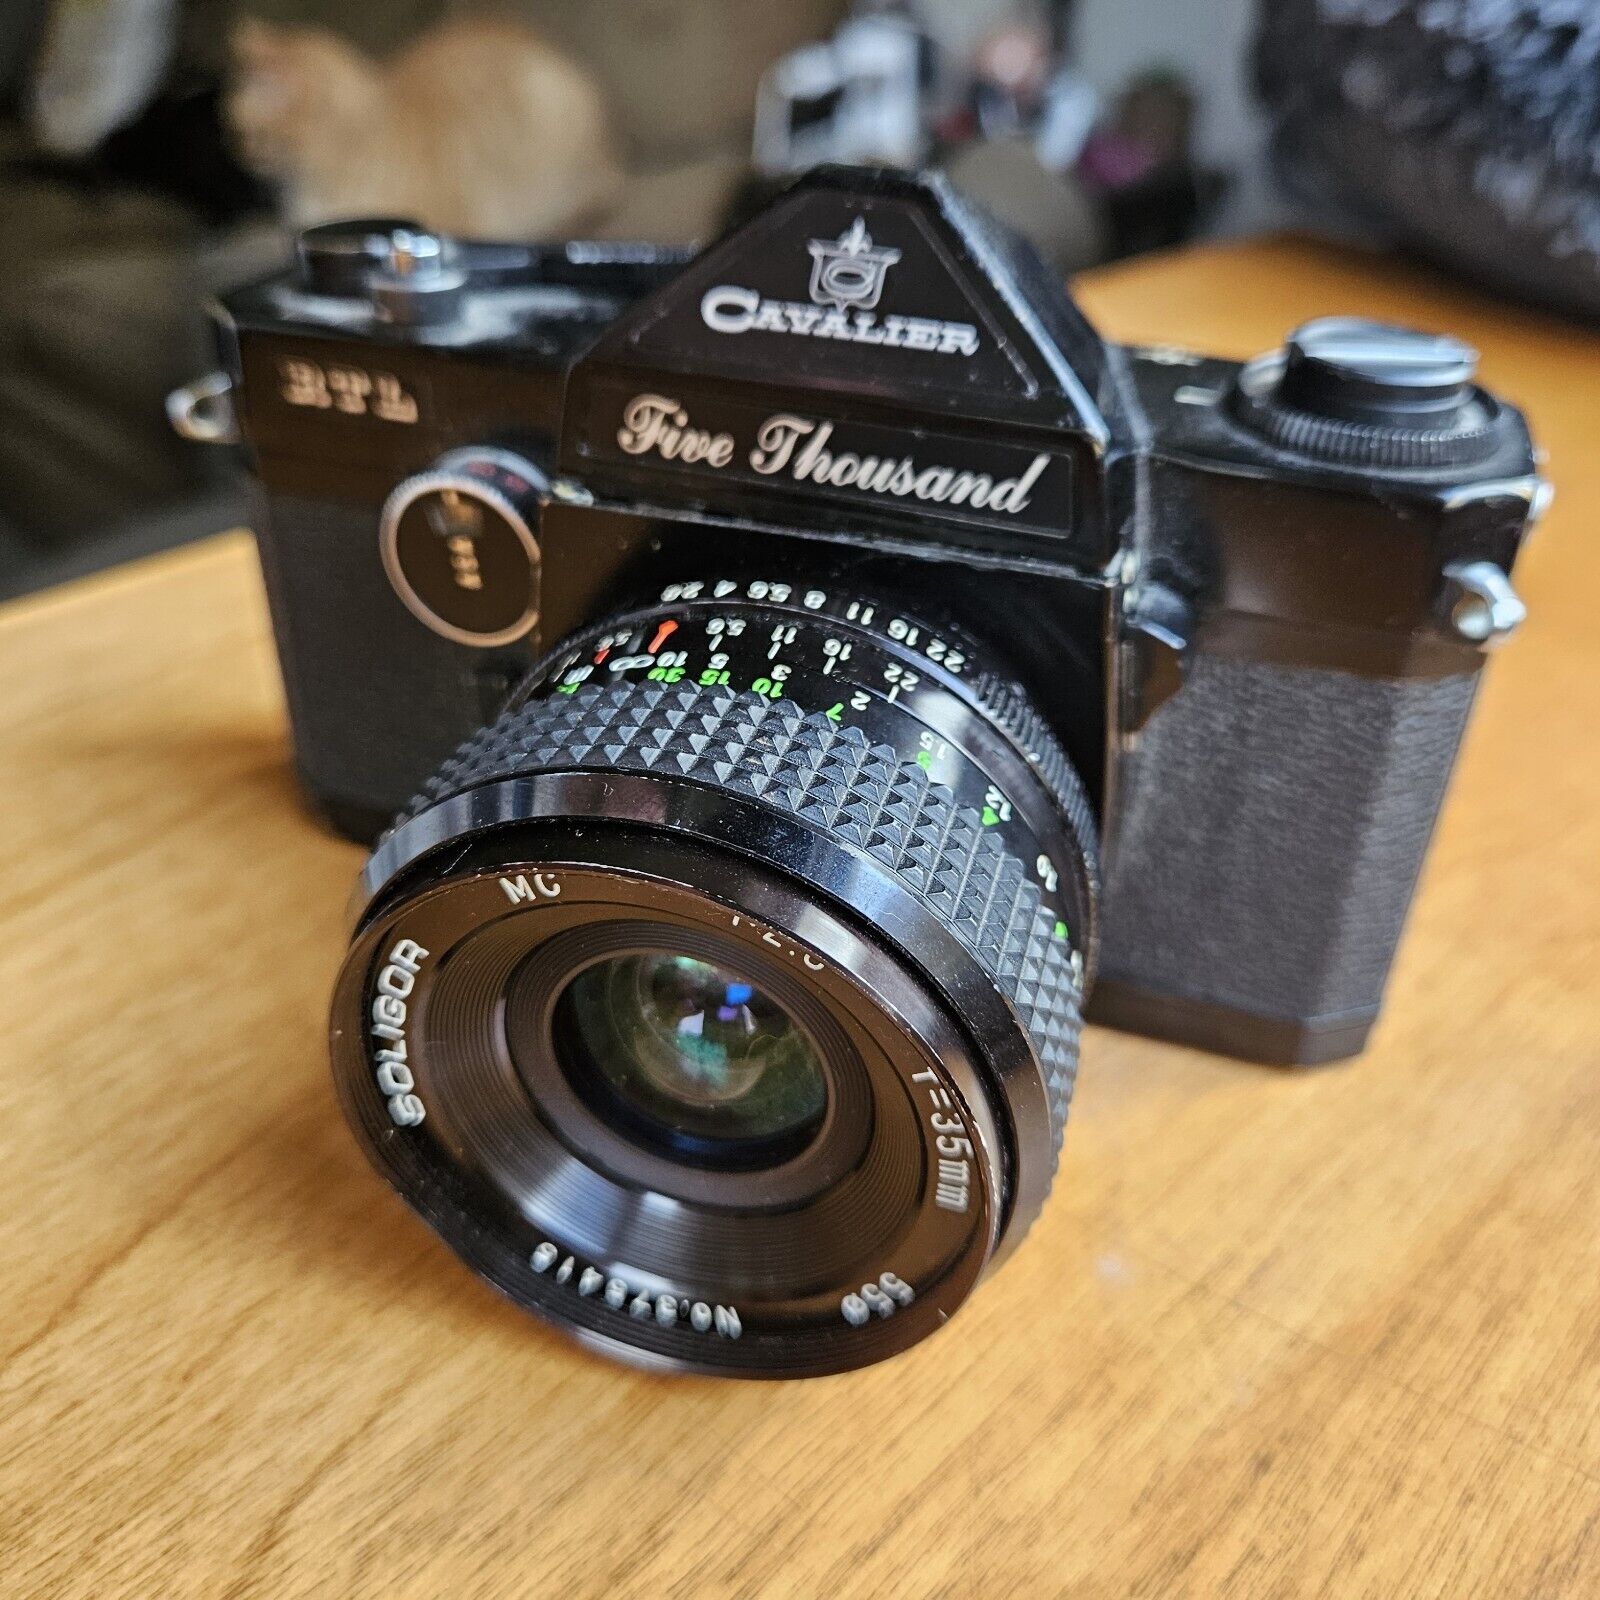 Cavalier Camera (Display Piece/Paperweight)